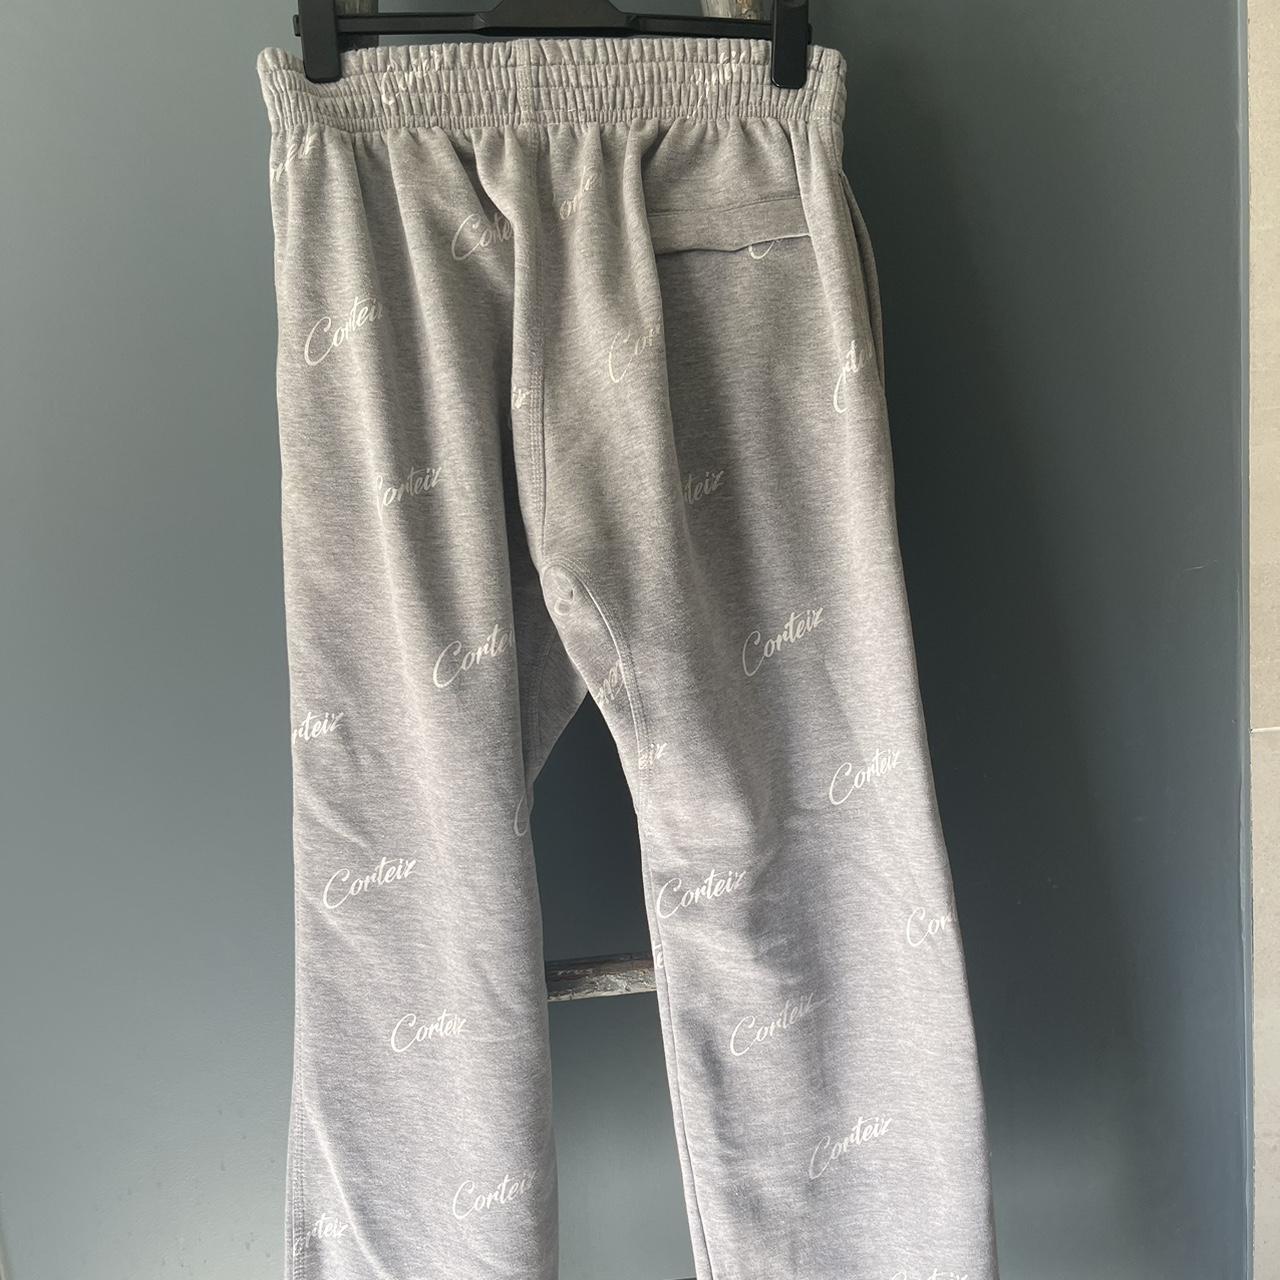 Cortiez grey track pants. Condition (7.5/10) - worn... - Depop